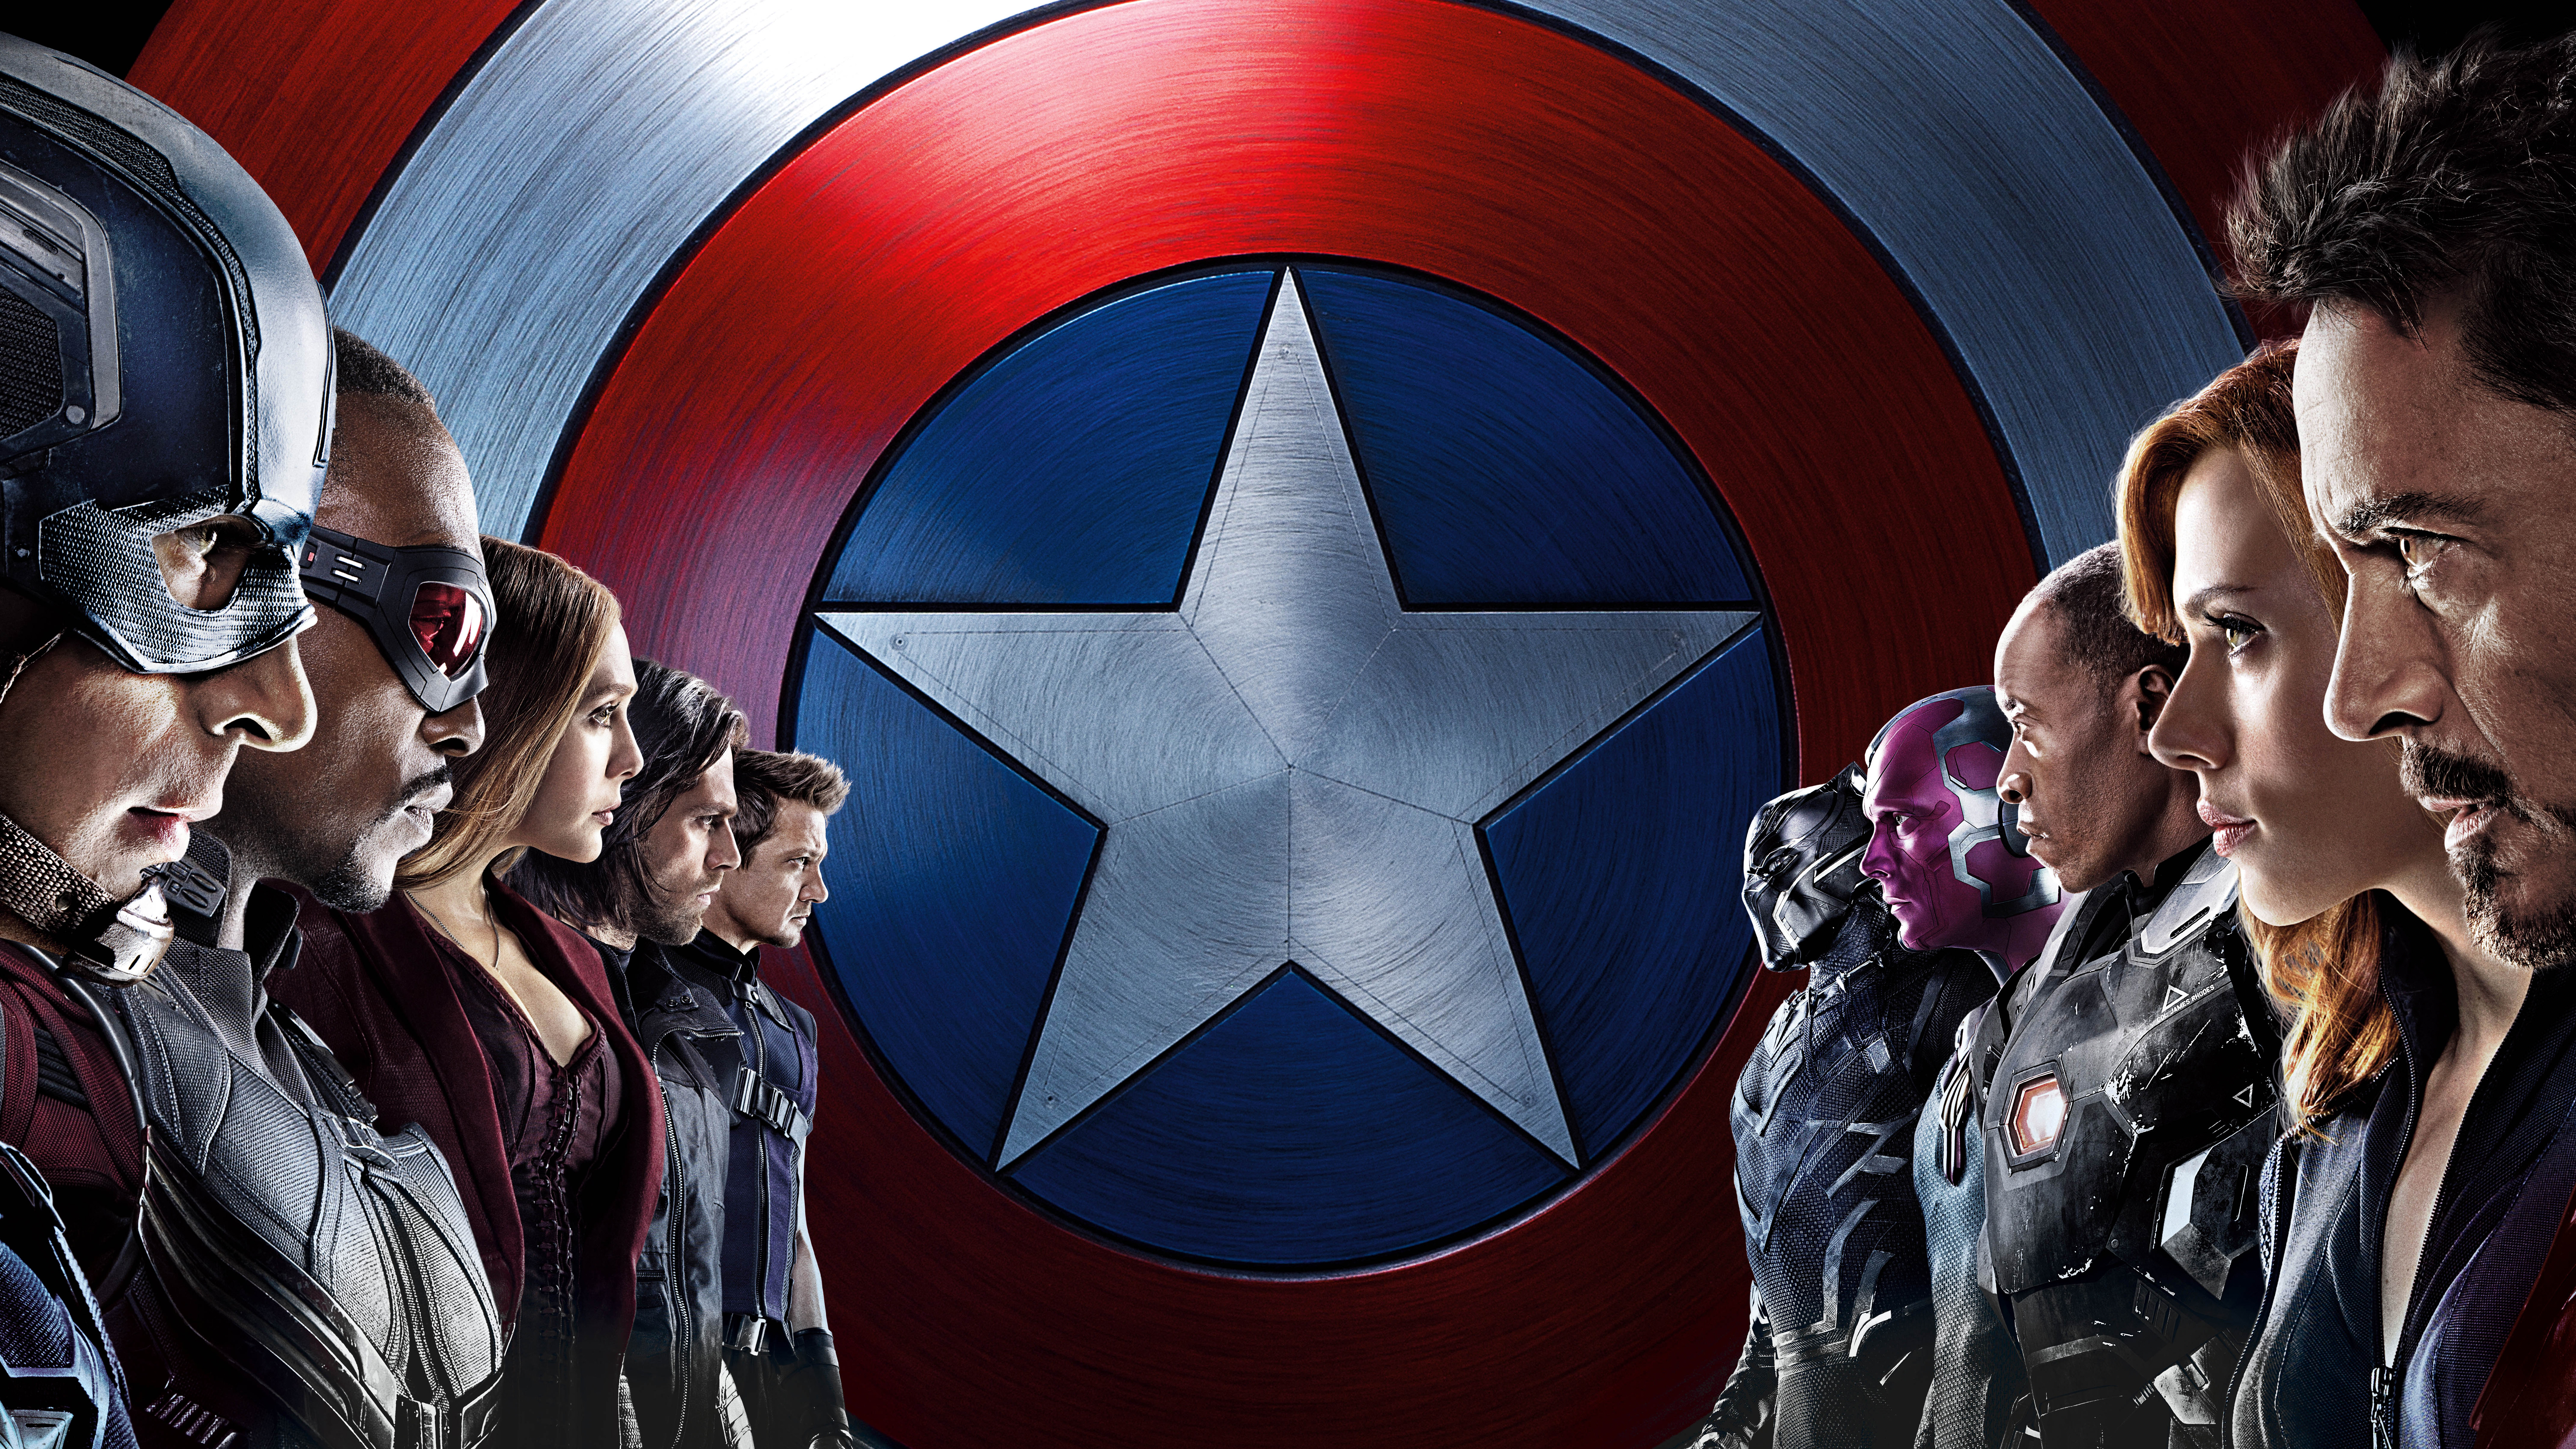 Popular Captain America: Civil War Image for Phone